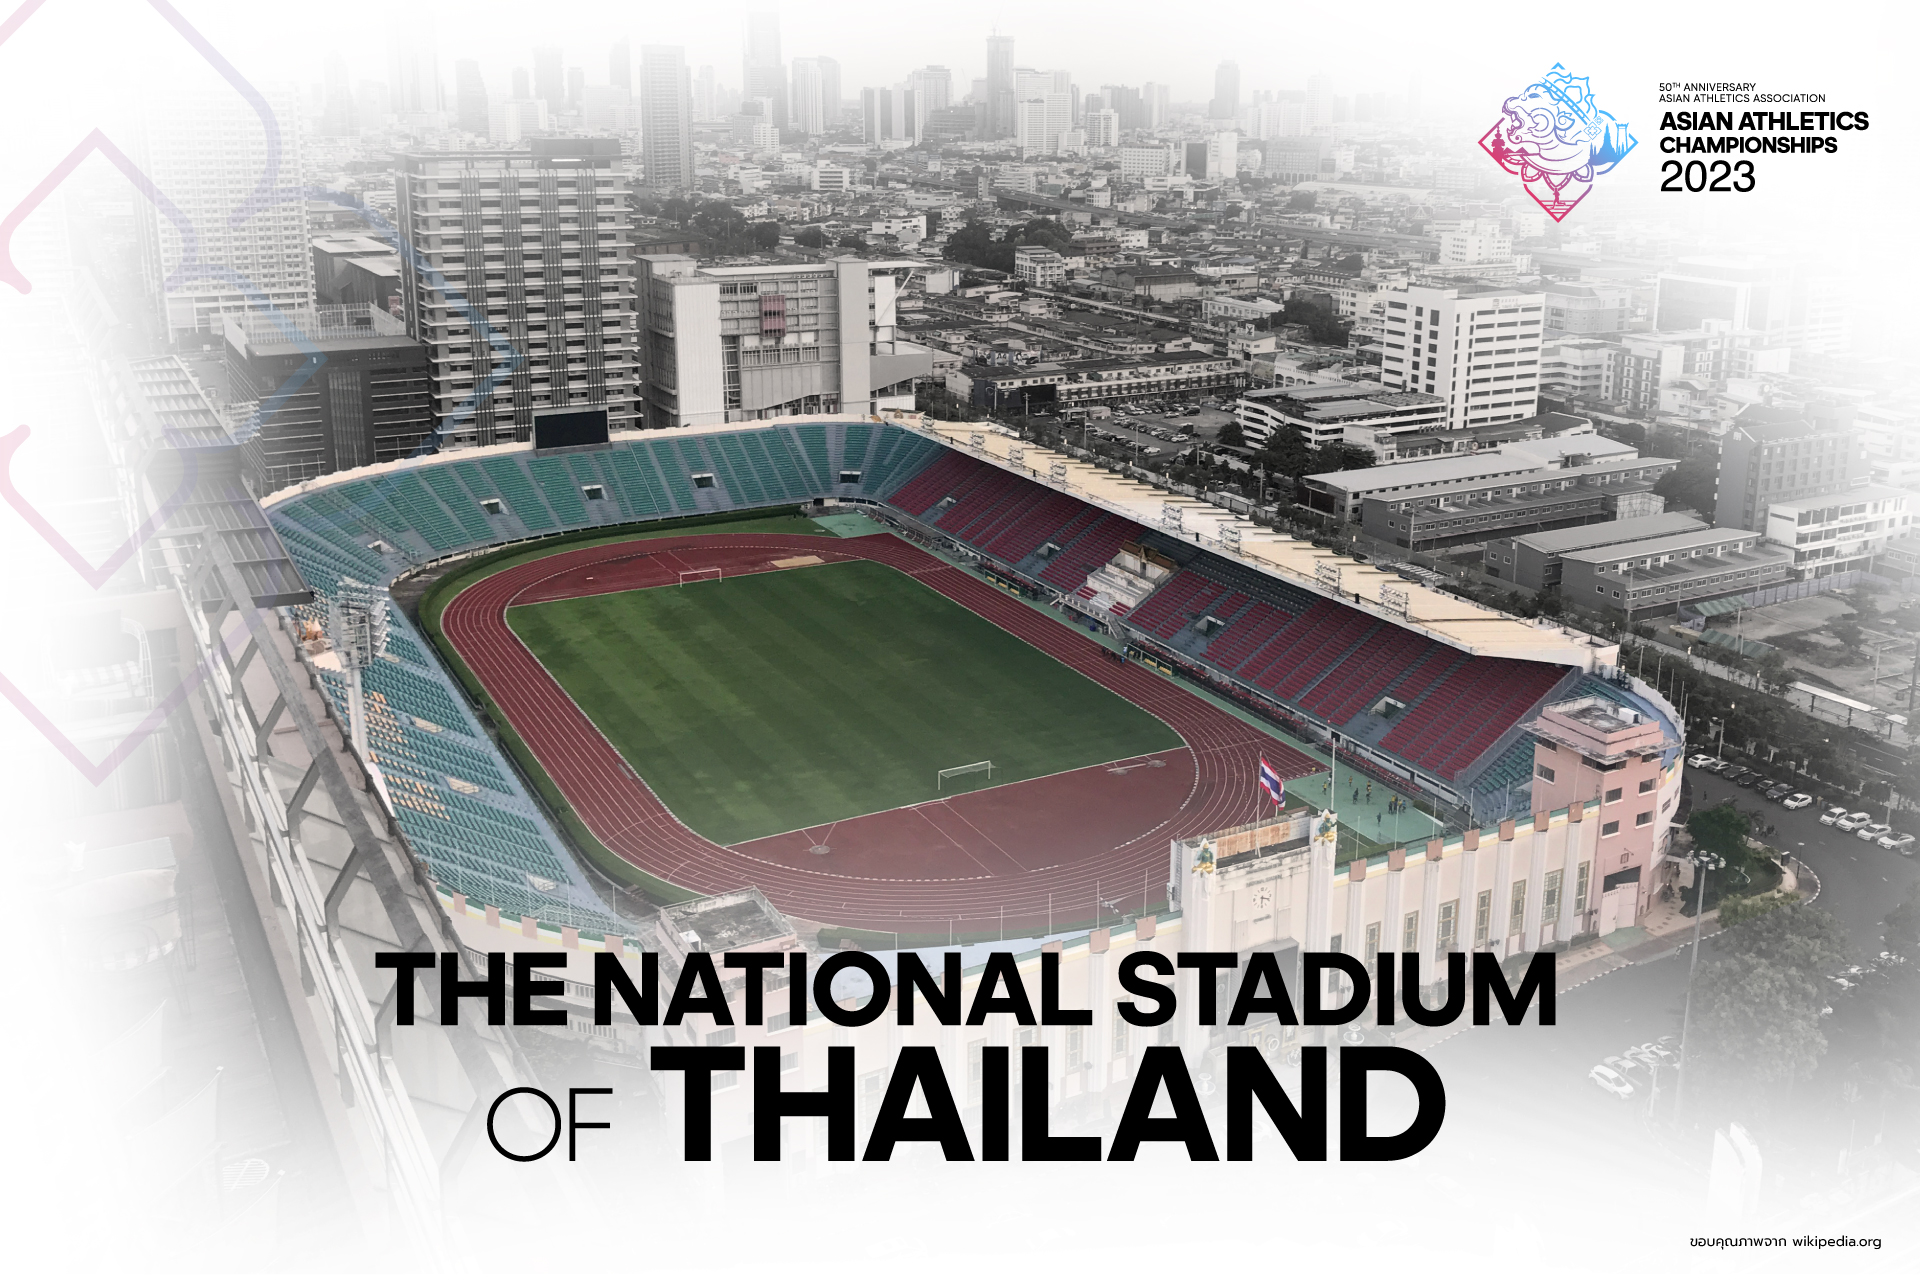 The national stadium of Thailand.